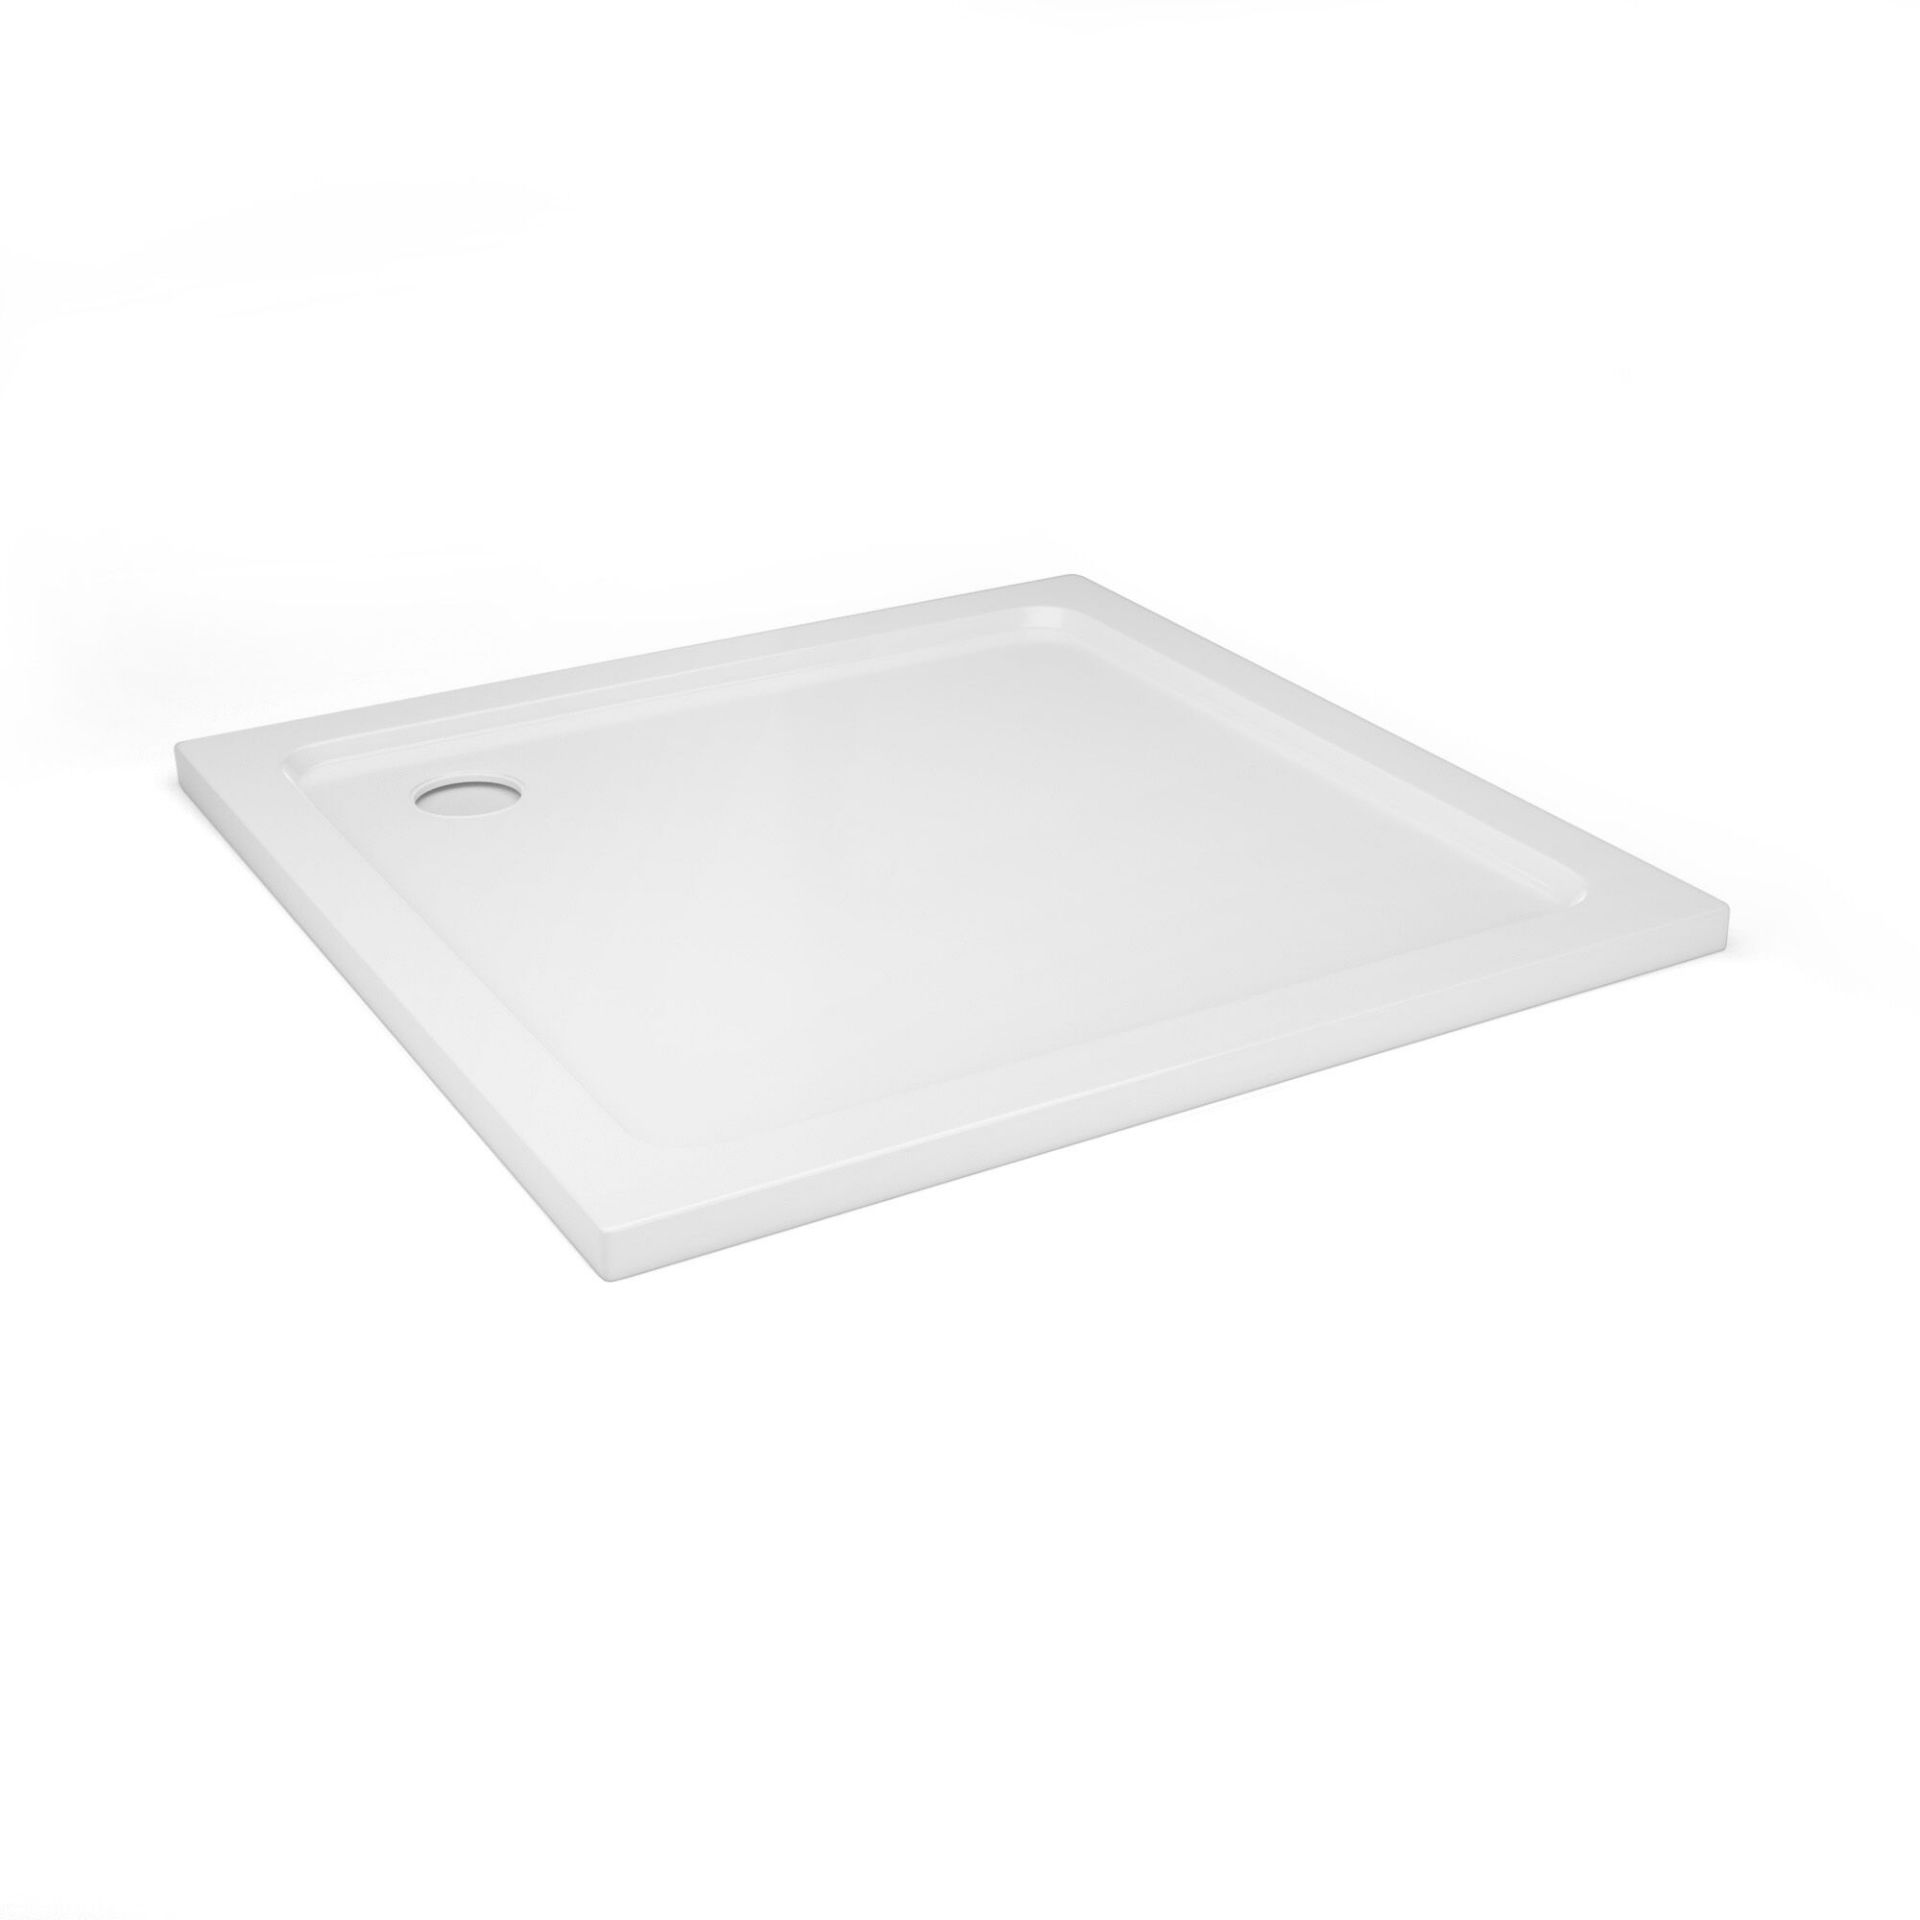 (DW205) 900x900mm Square Ultra Slim Stone Shower Tray. Low profile ultra slim design Gel coate... - Image 2 of 2